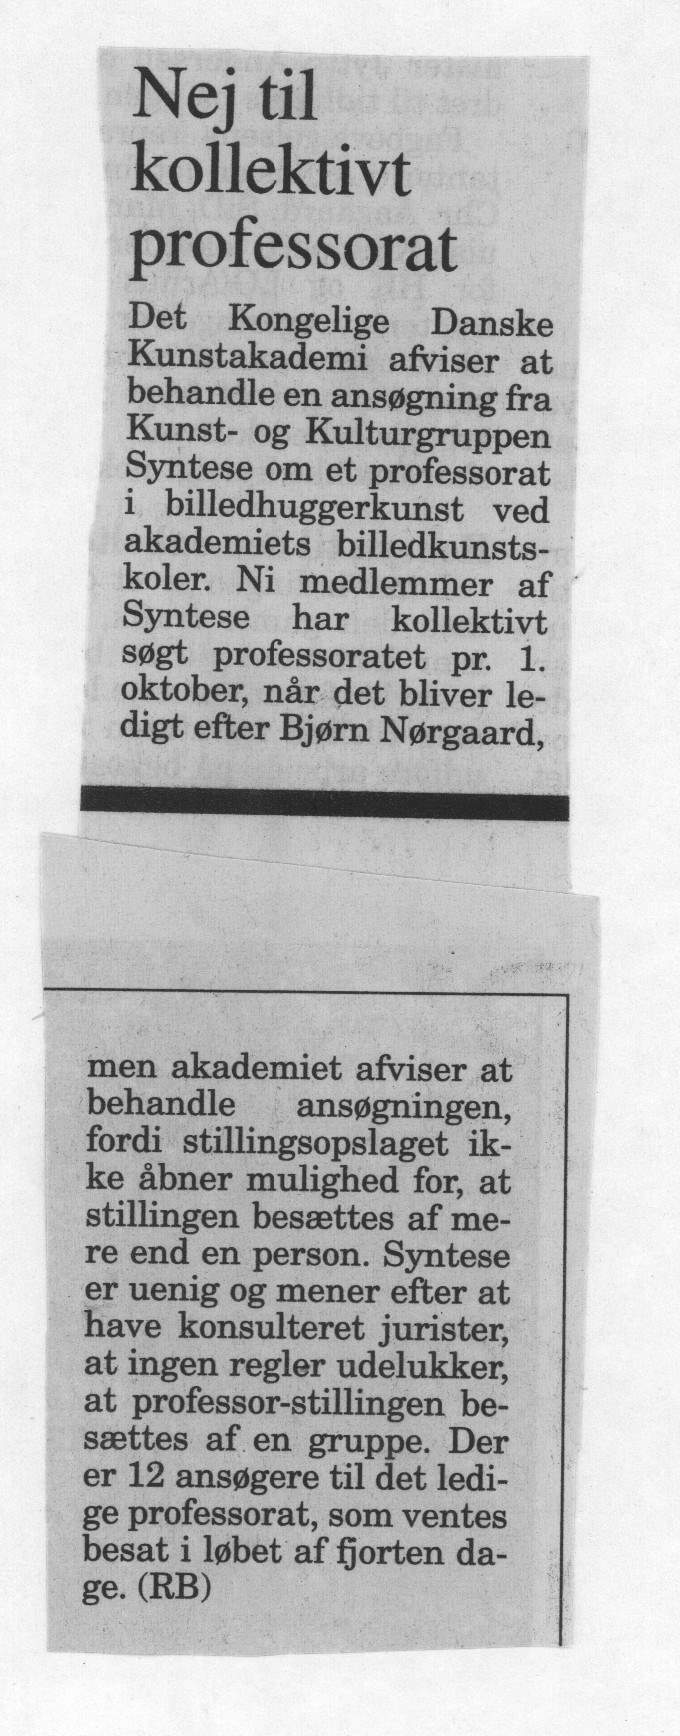 Nej til kollektivt professorat. Omtale (Kollektivt professorat 1994). RB. Information.